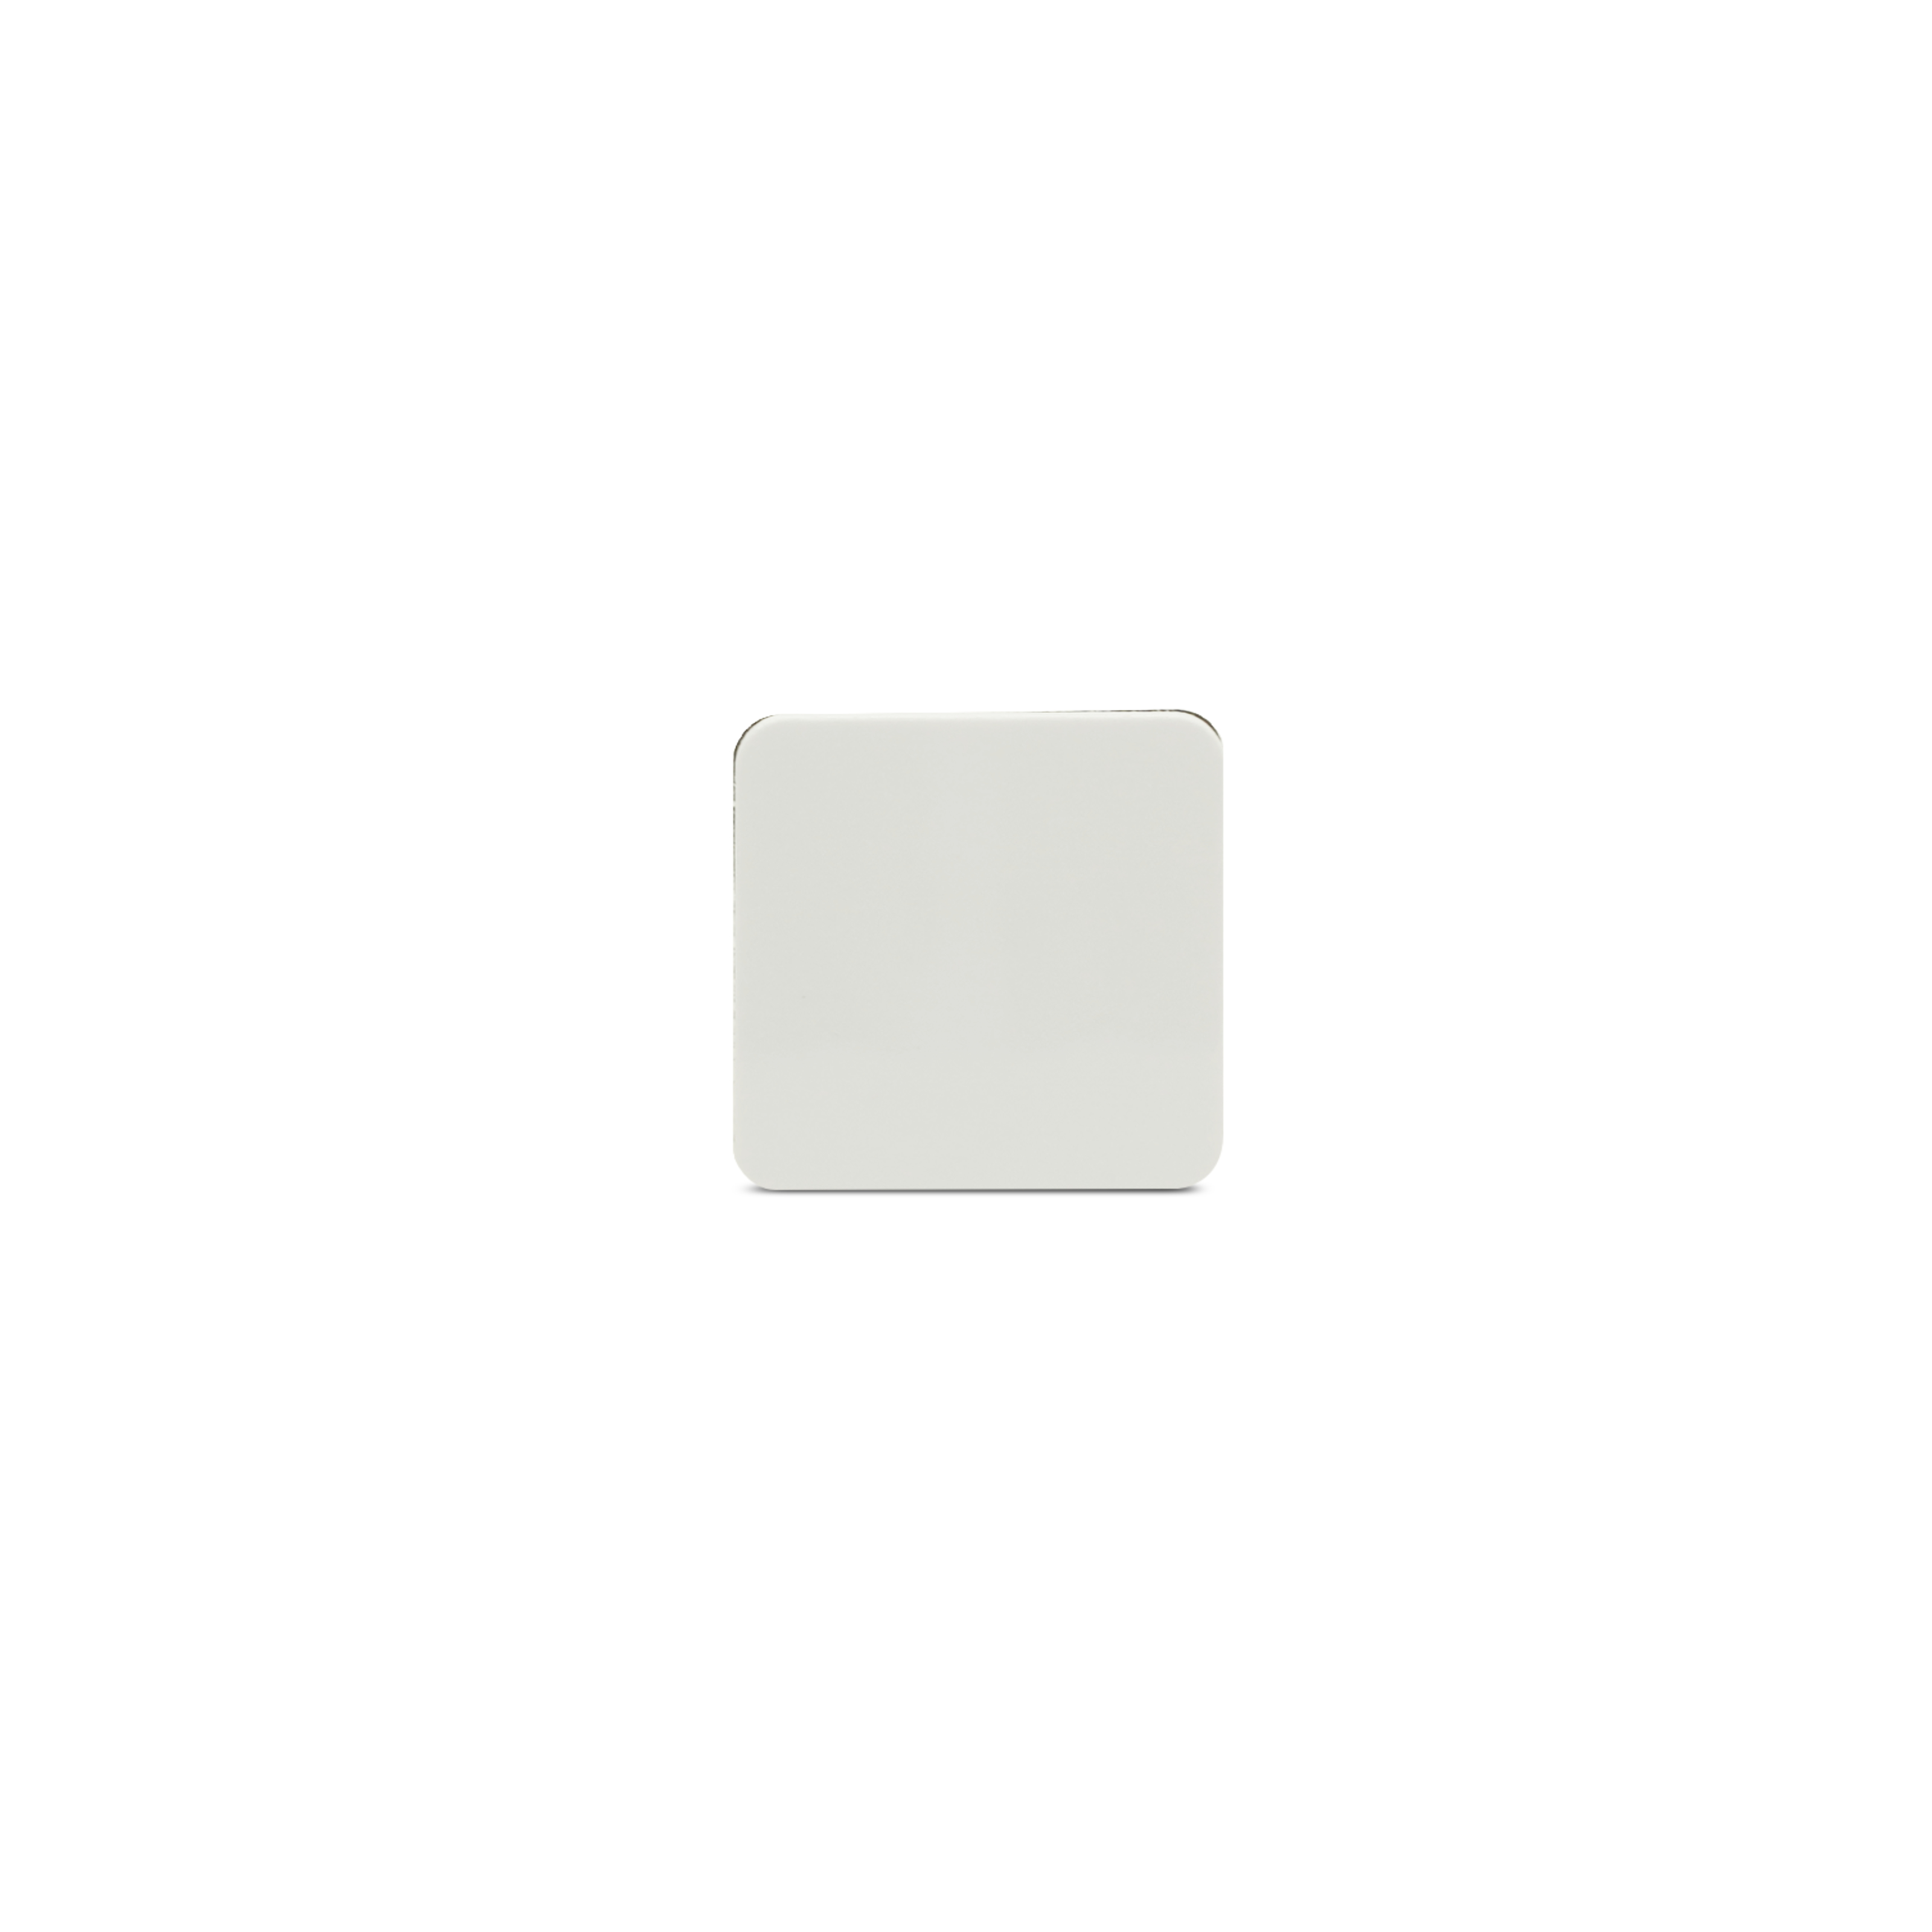 NFC Sticker PVC On-Metal - 19 x 19 mm - NTAG213 - 180 Byte - white